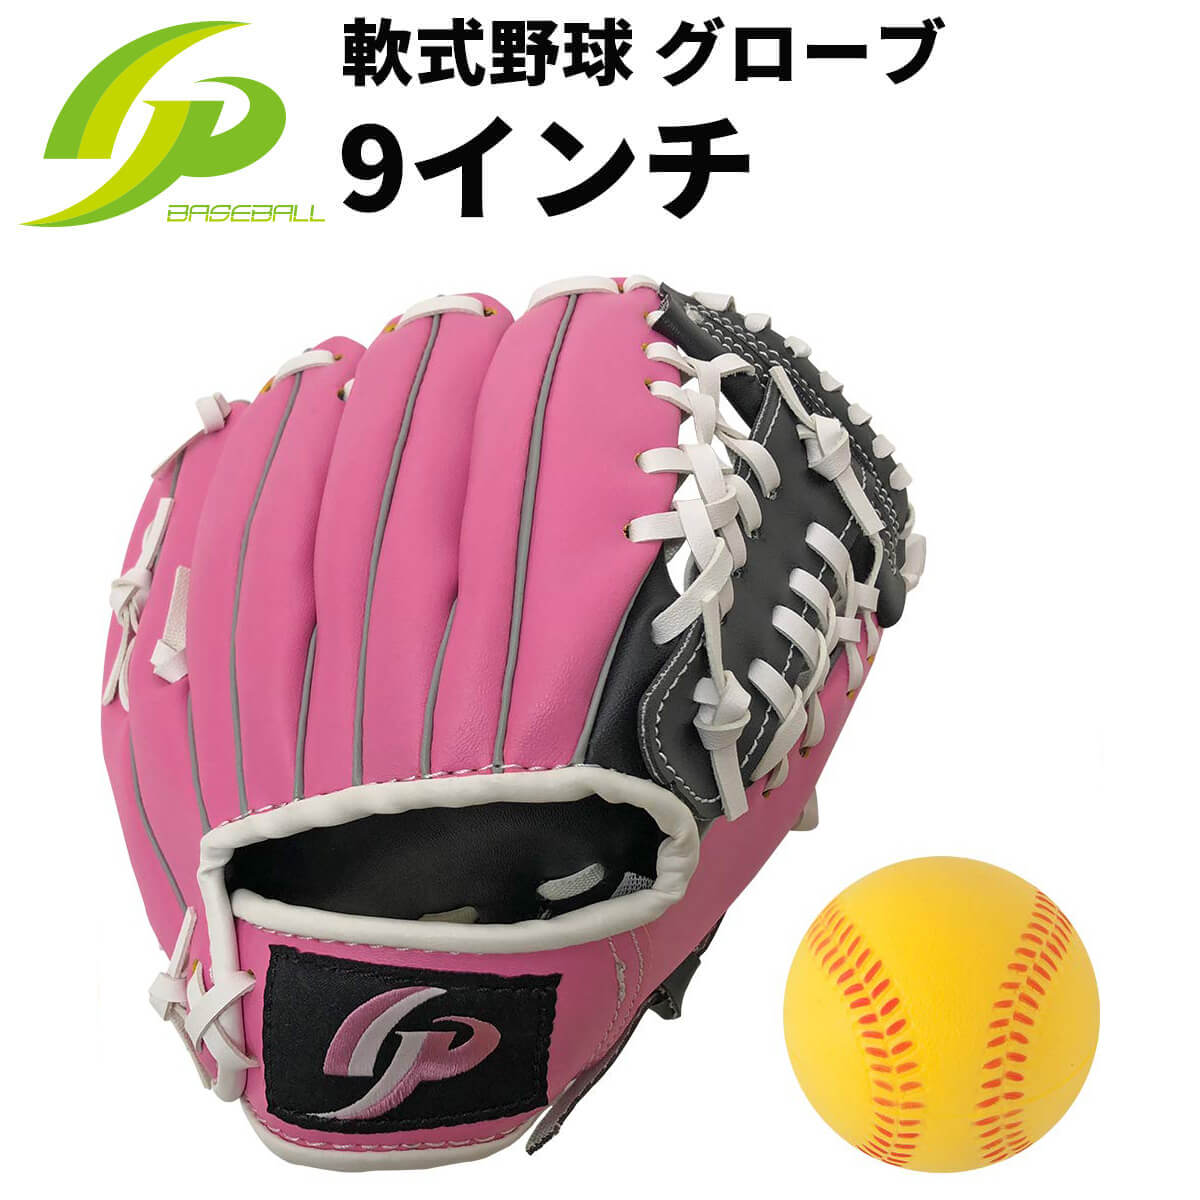 GP 野球 グローブ 子供用 (小学校 低学年用) 9インチ (ピンク) 【右投げ】 やわらかボール付き